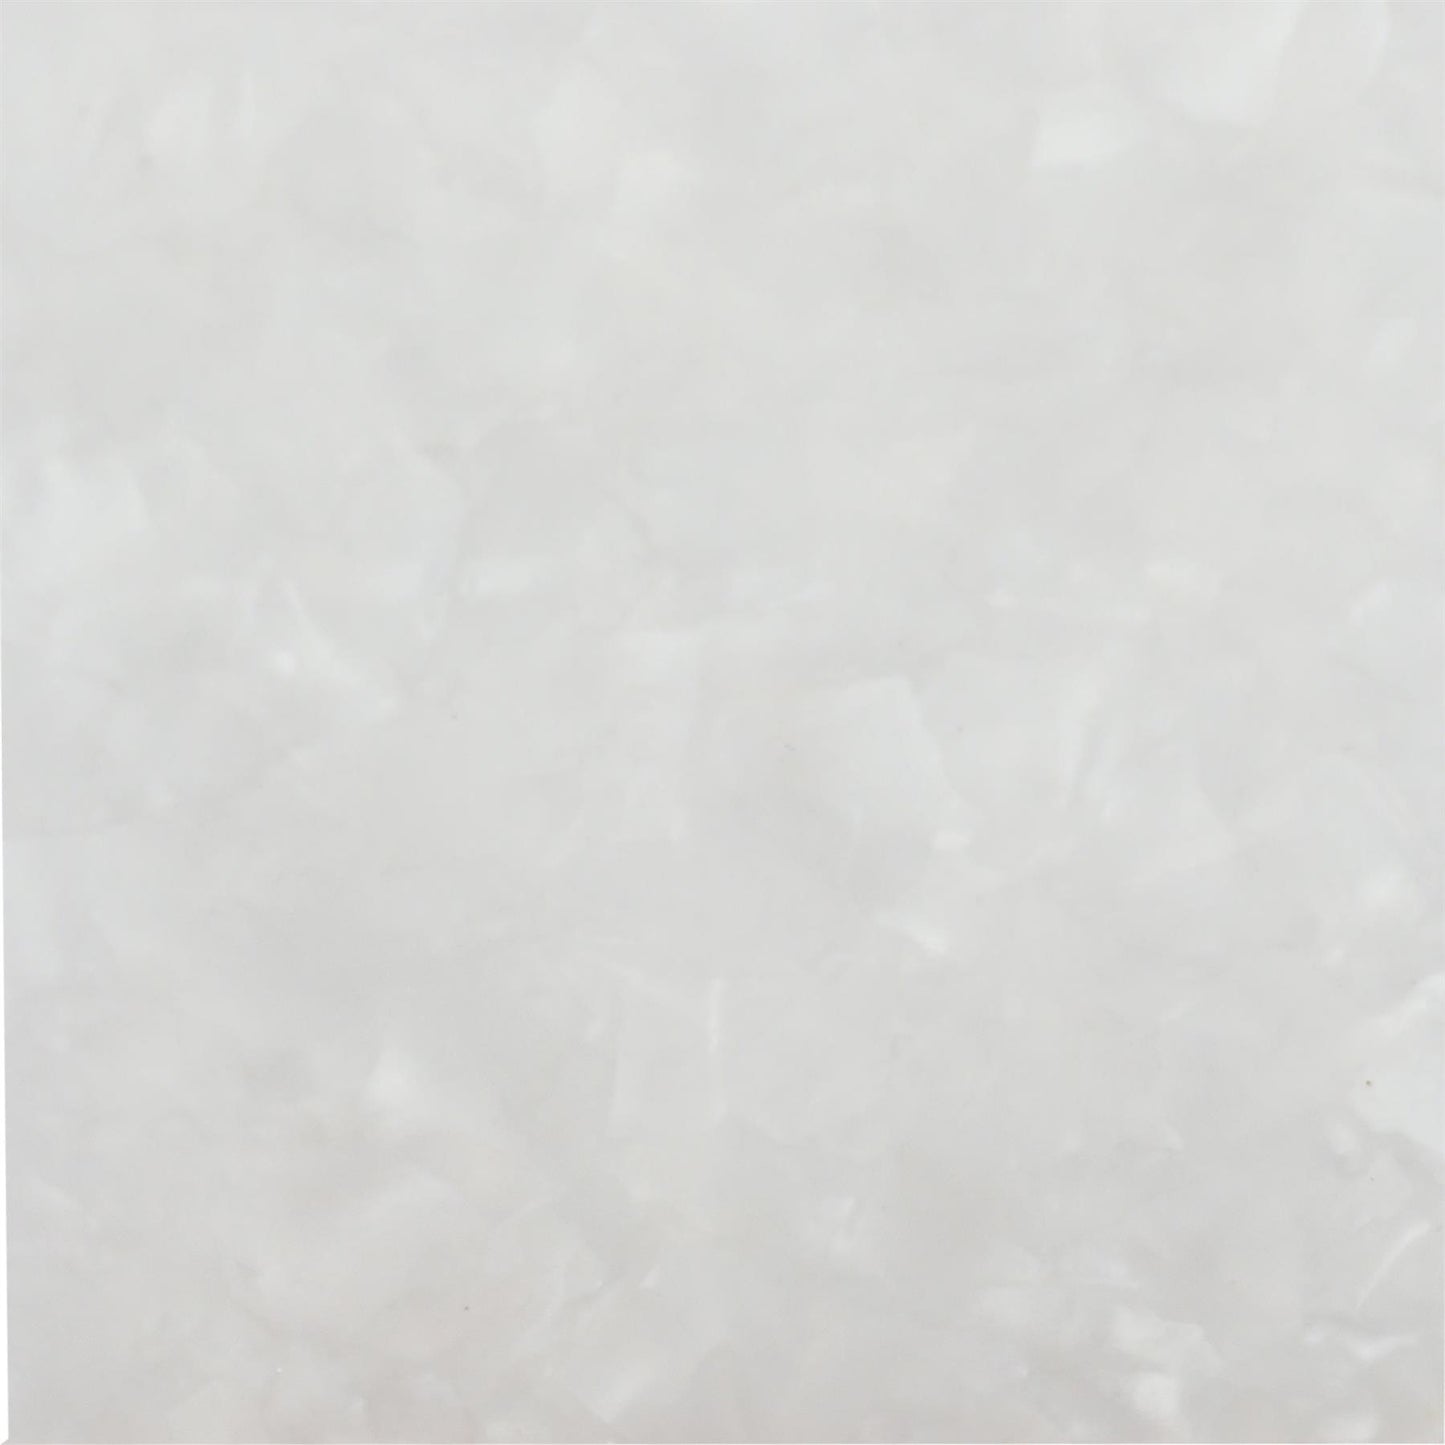 Incudo White Pearloid Acrylic Sheet - 400x300x3mm (15.7x11.81x0.12")